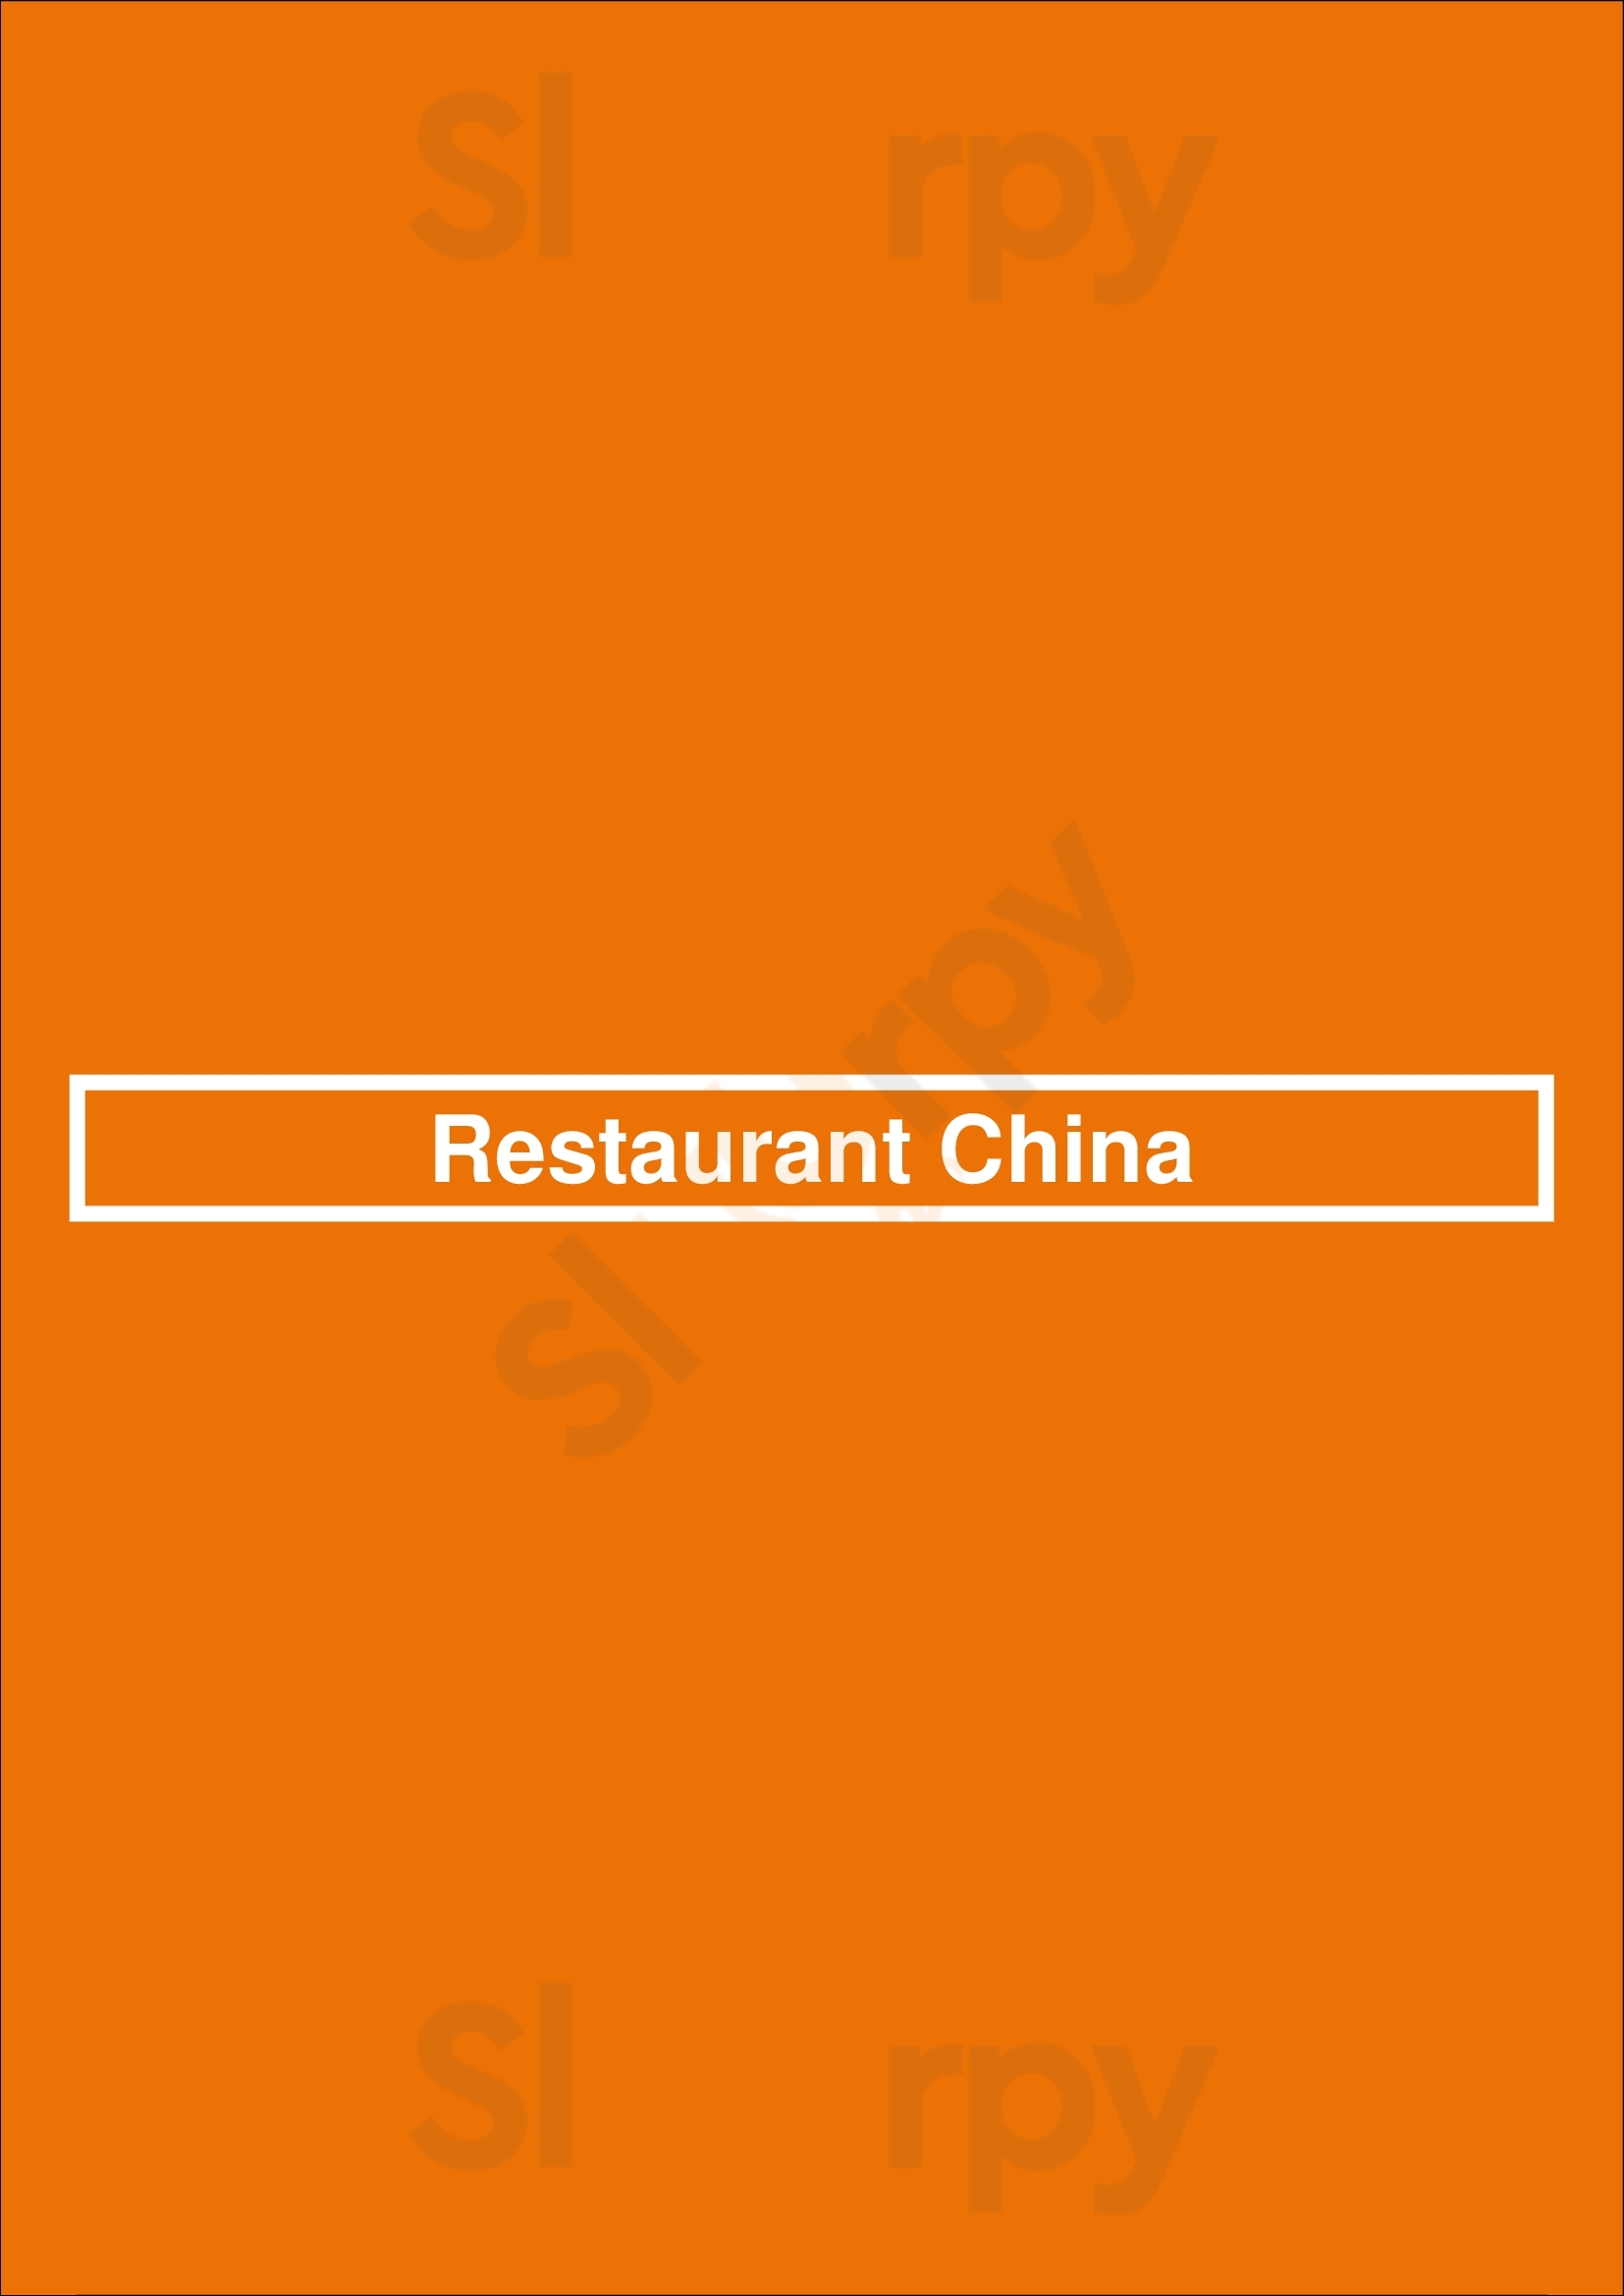 Restaurant China Soest Menu - 1